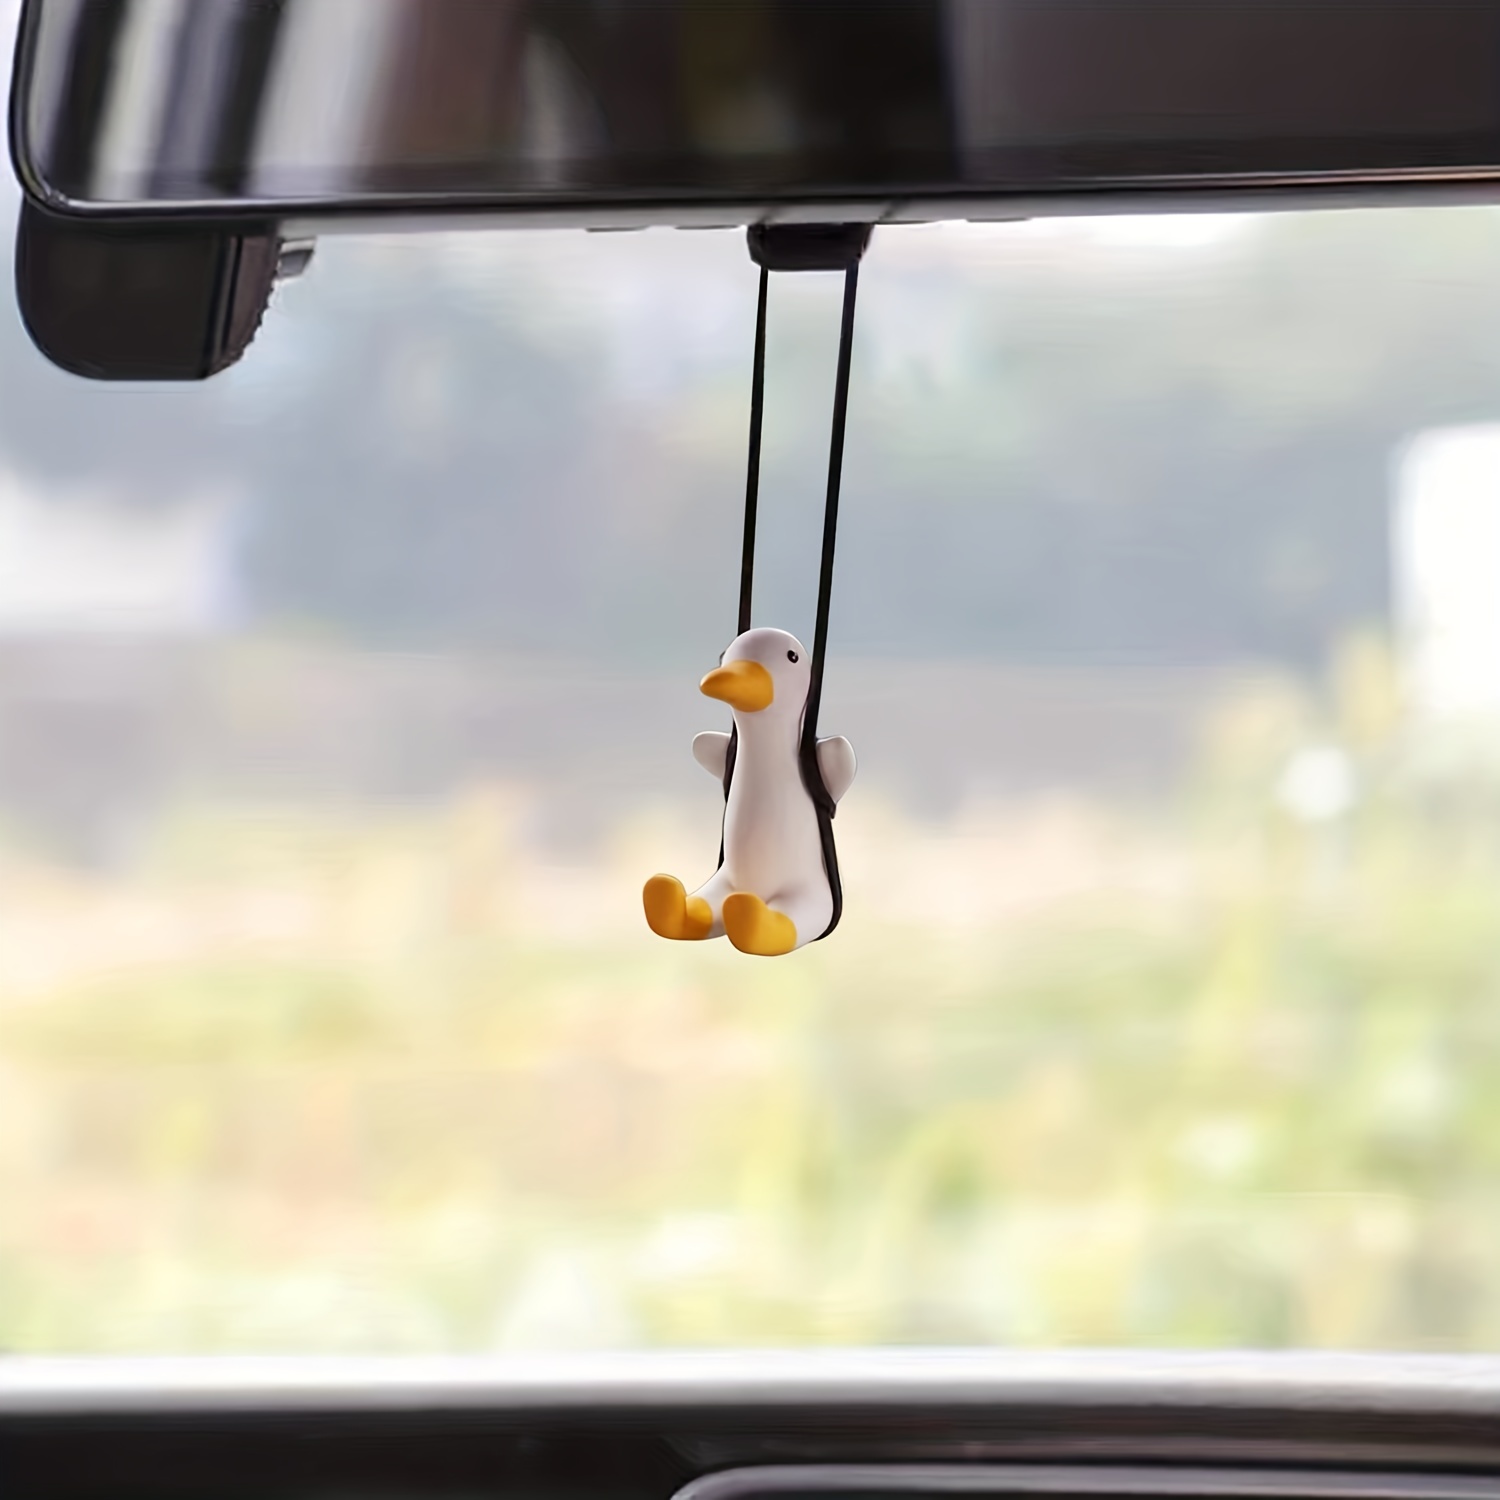 Swinging Duck Hanging Figure Cute Swing Duck For Car Rear View Mirror  Pendant